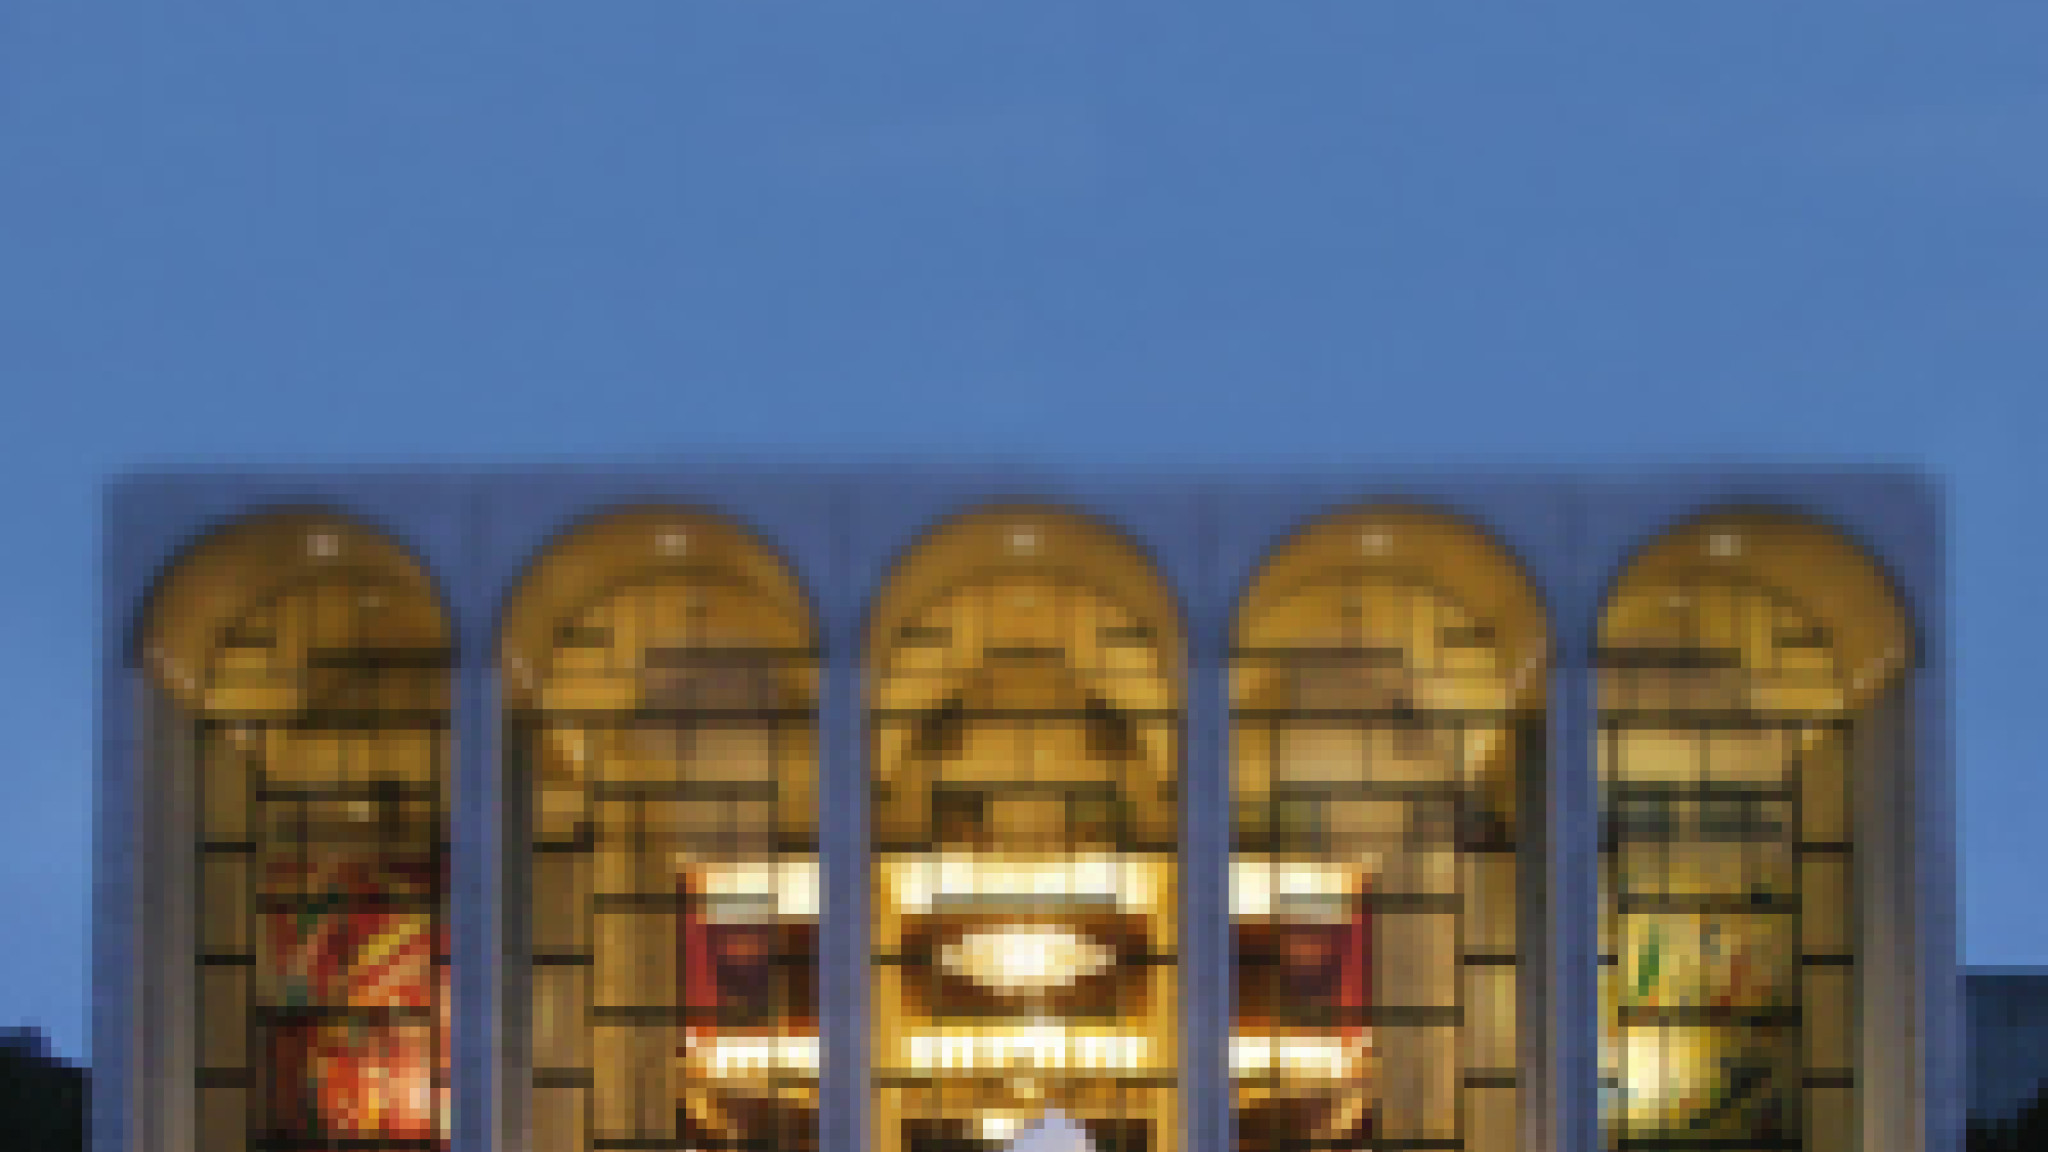 Metropolitan Opera / New York